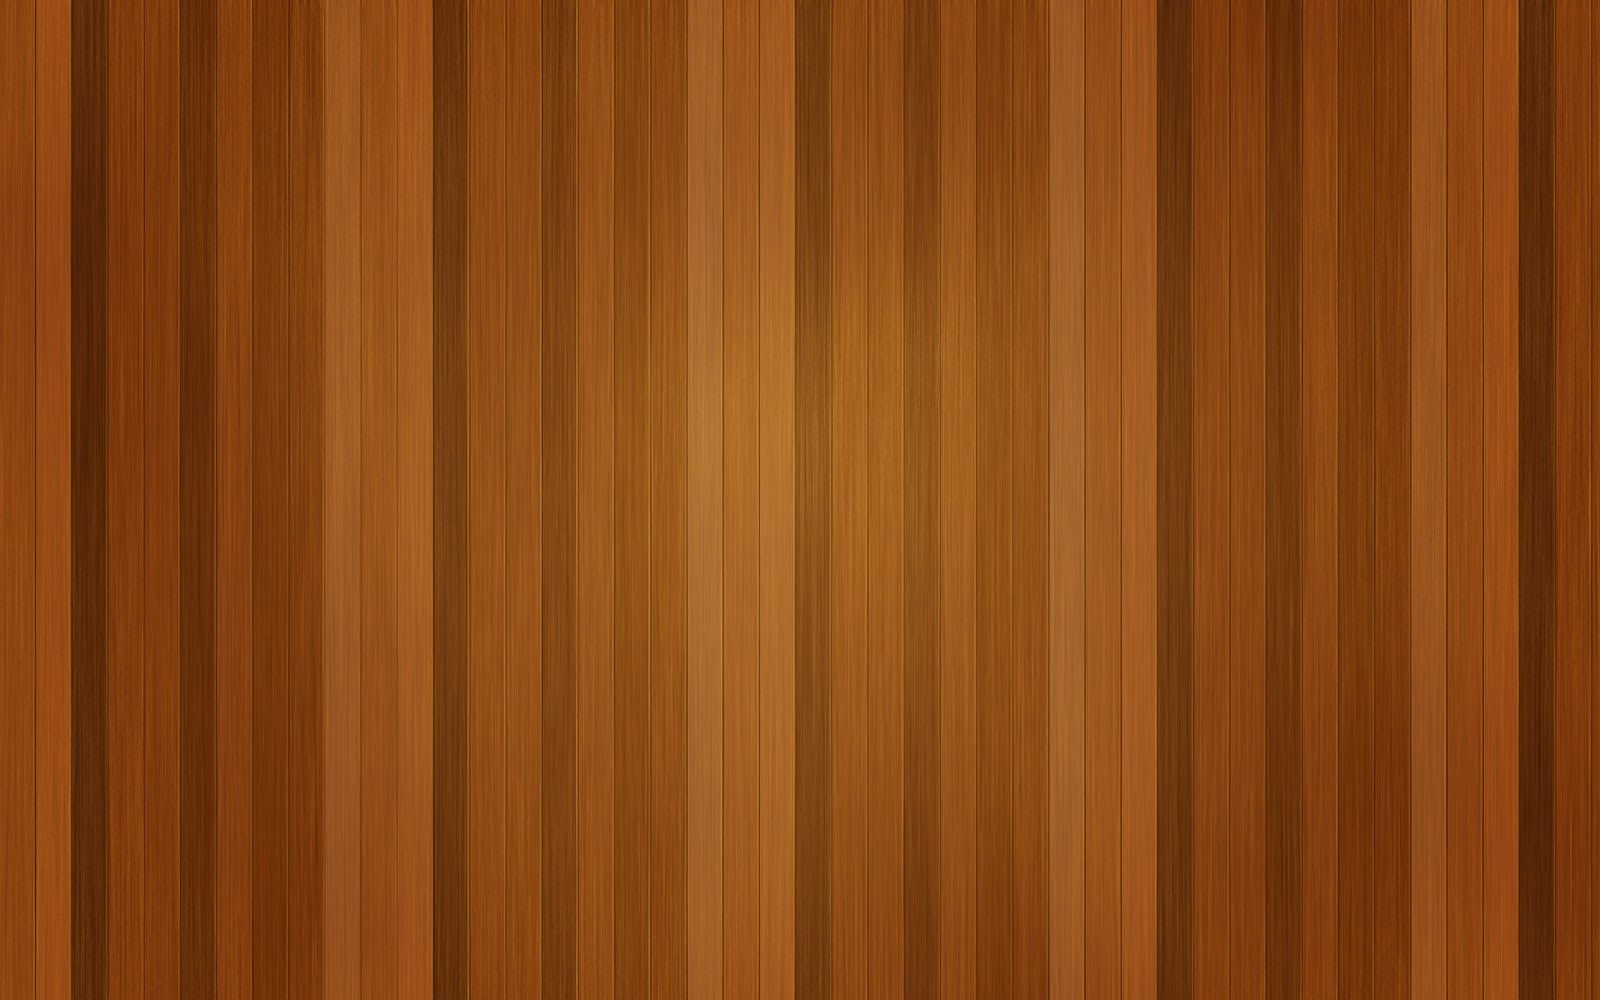 Best-top-desktop-hd-wall-wood-wallpaper-wood-wallpapers-wall ...